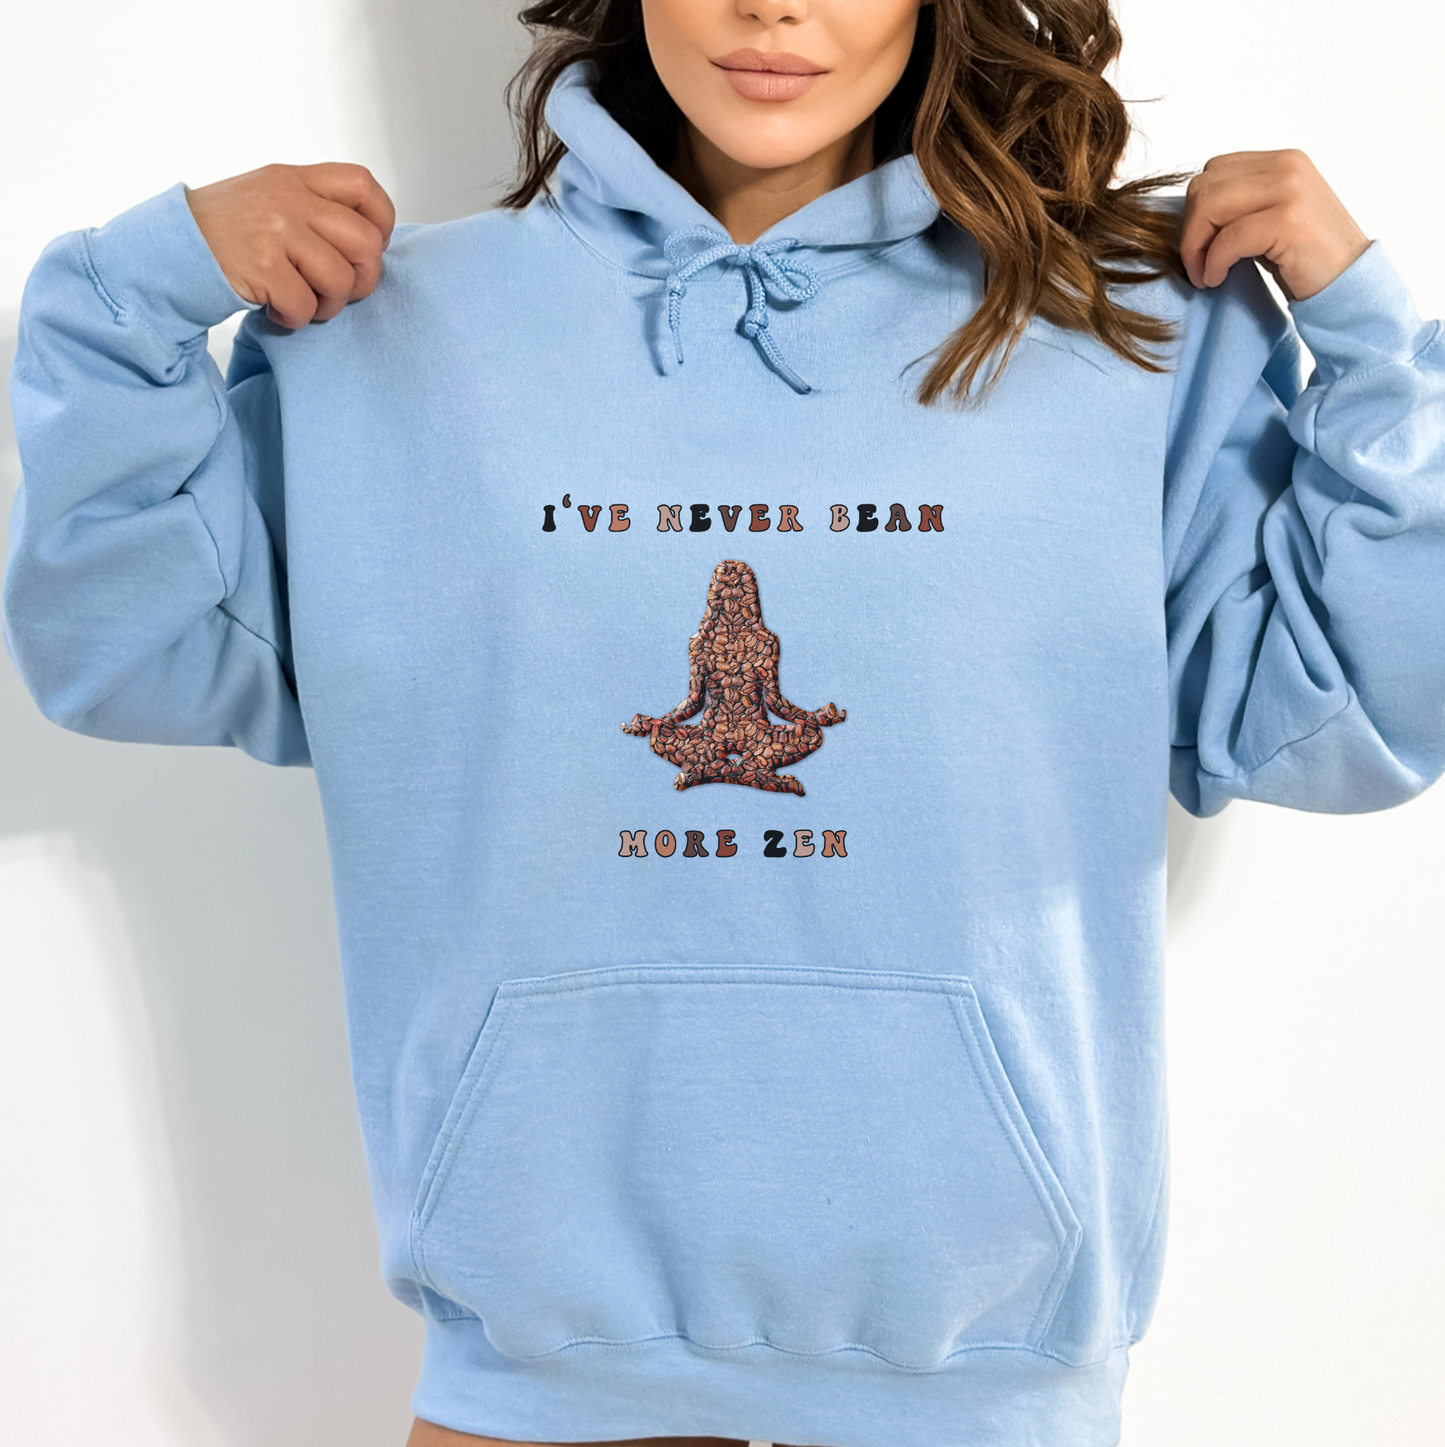 NEVER BEAN MORE ZEN Yoga Meditation Hoodie